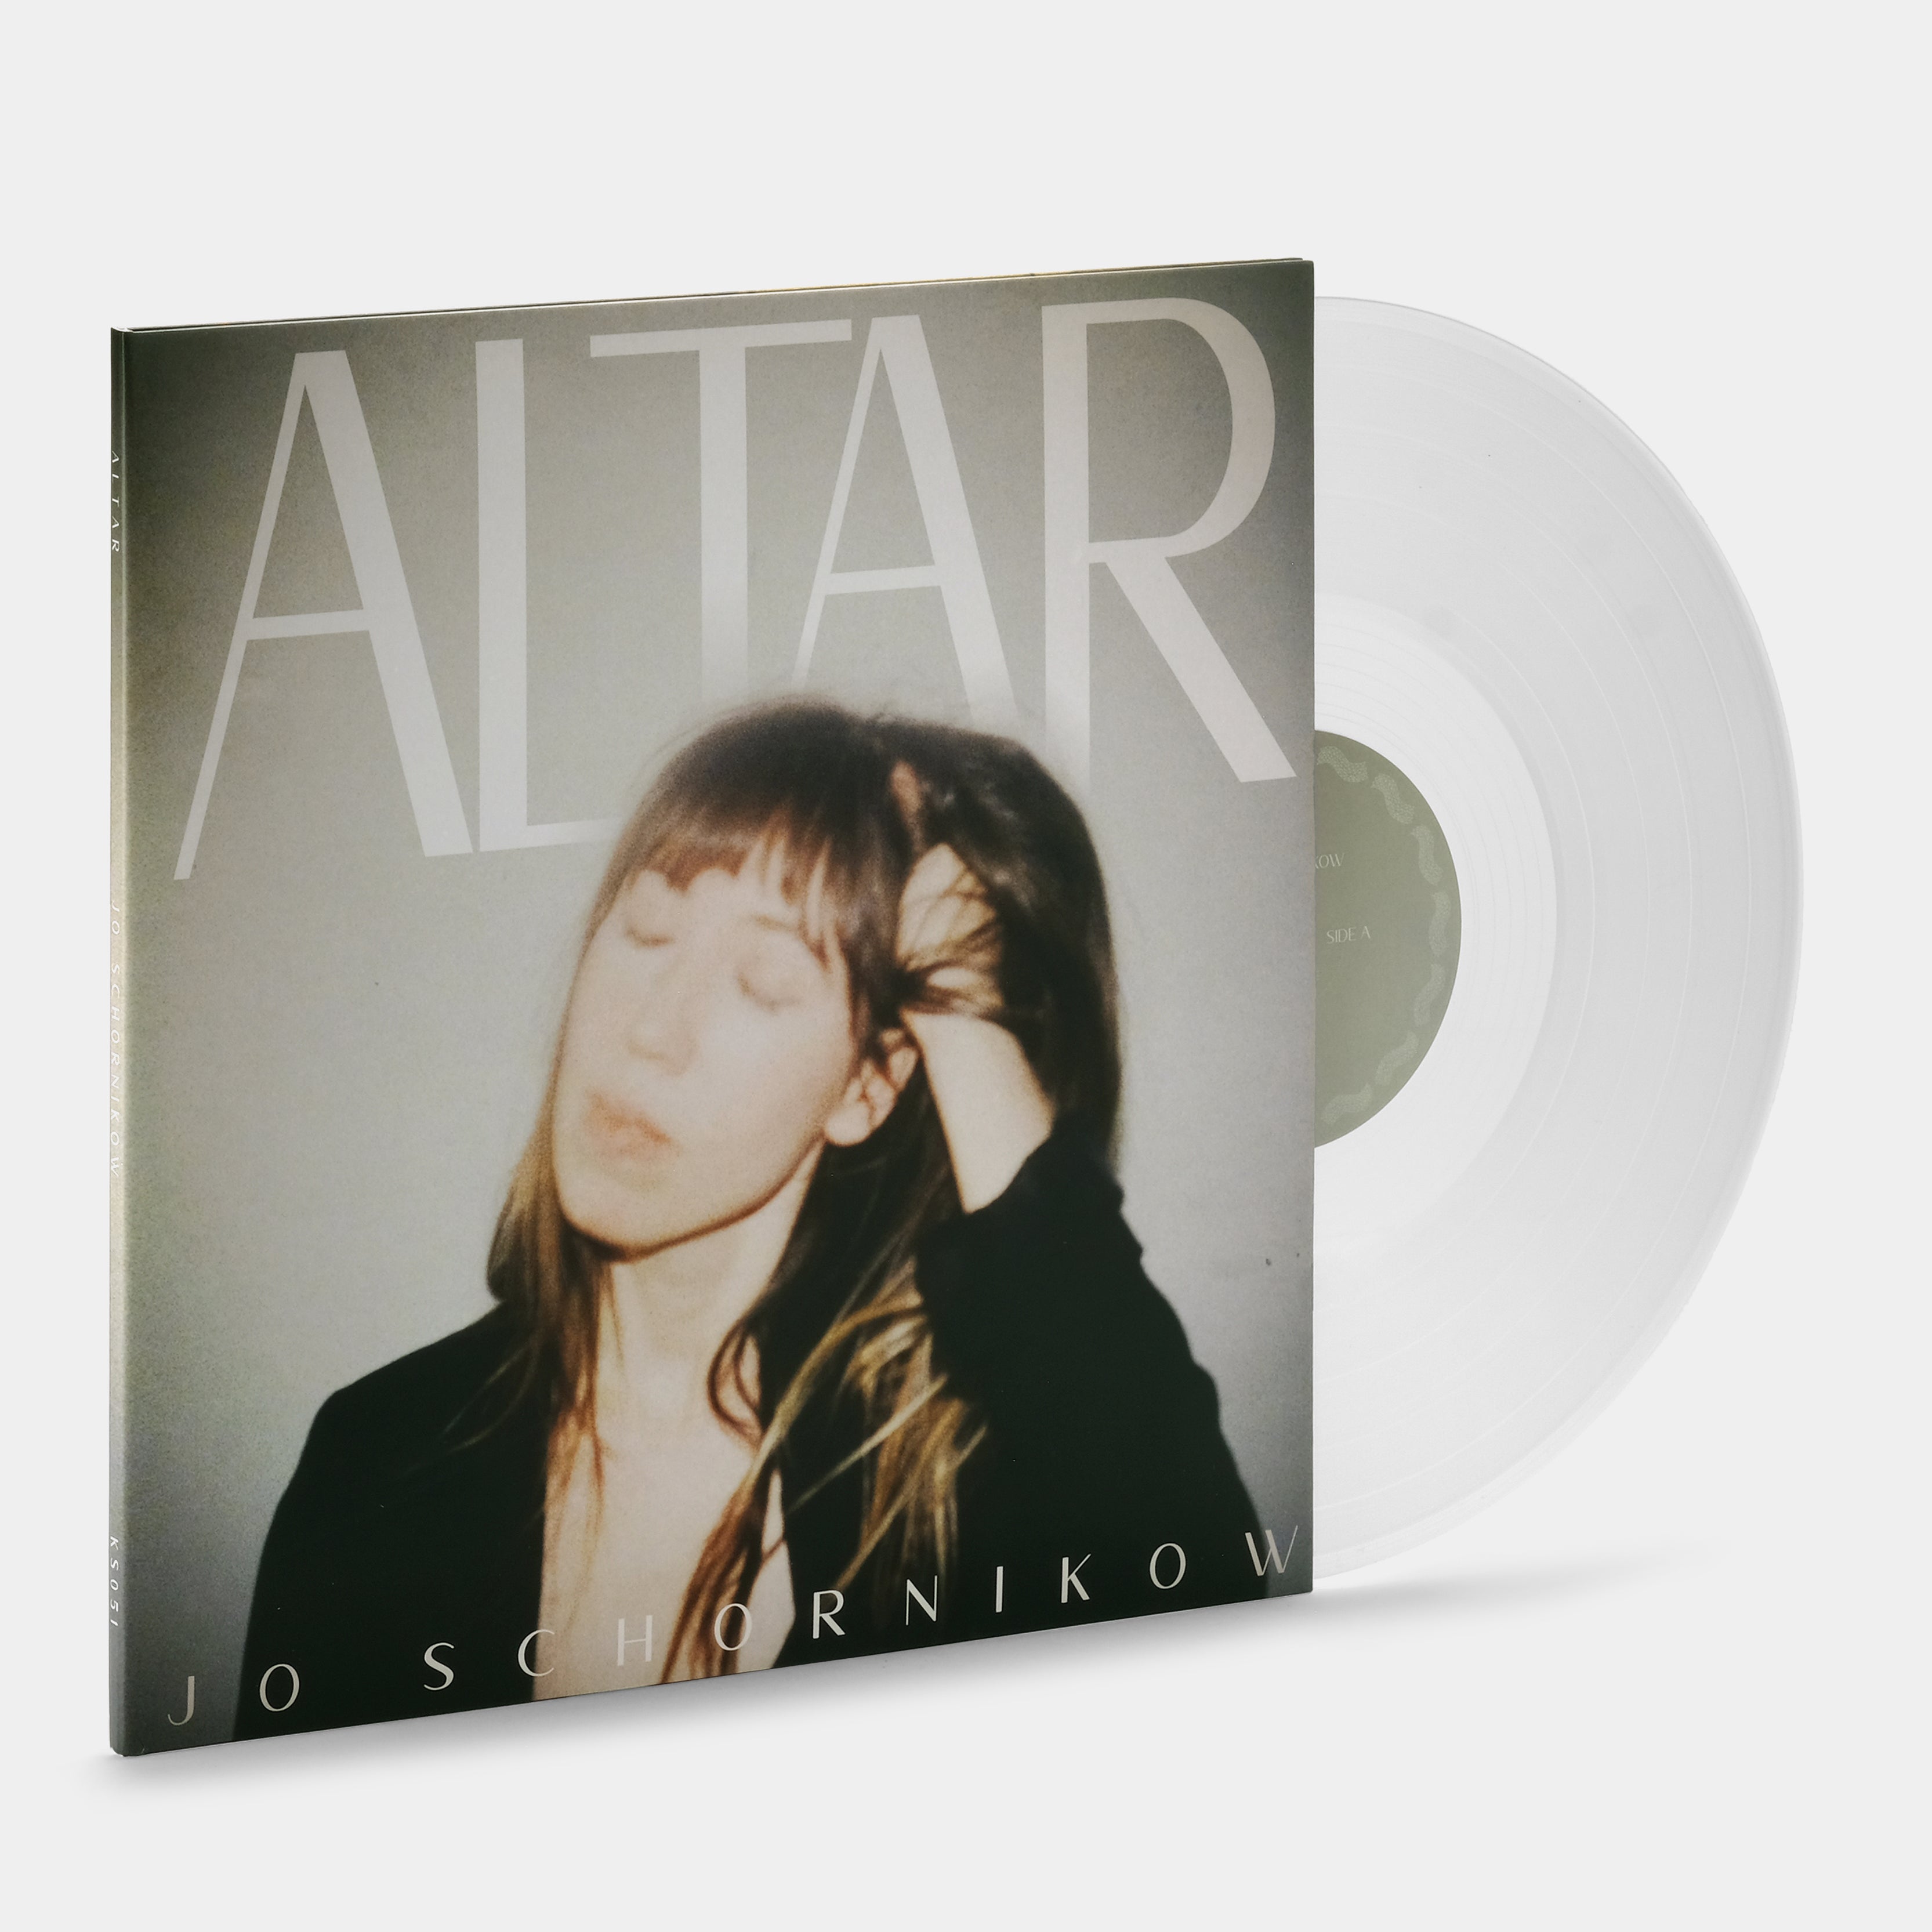 Jo Schornikow - Altar LP Clear Vinyl Record